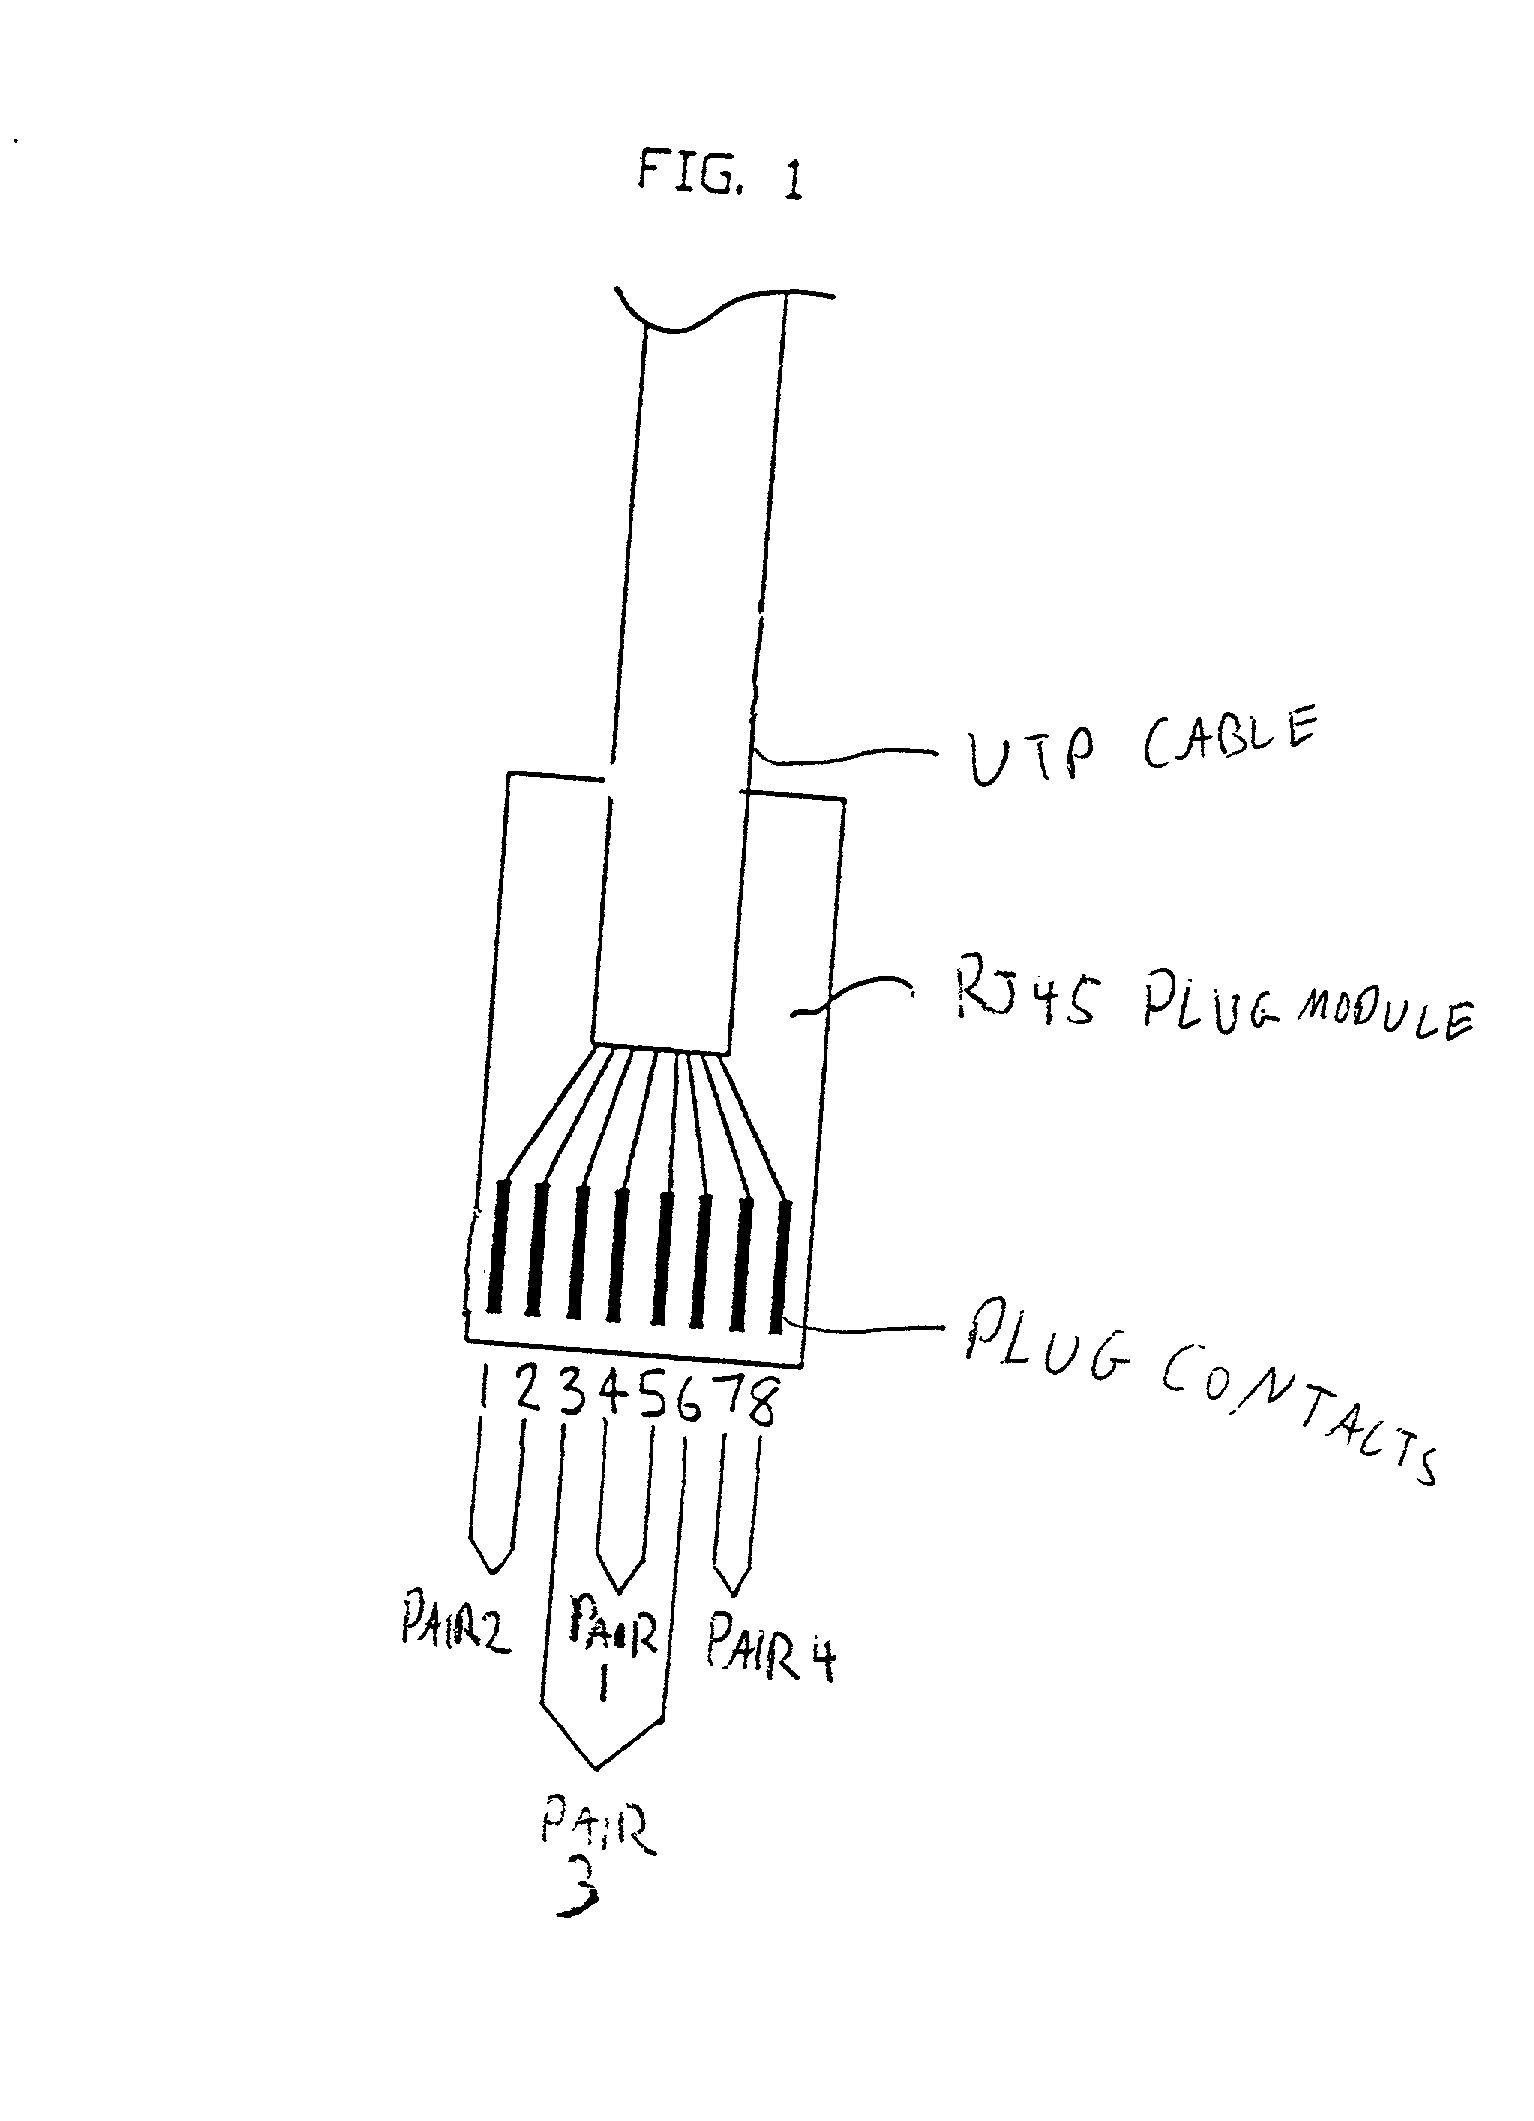 Low noise communication modular connnector insert